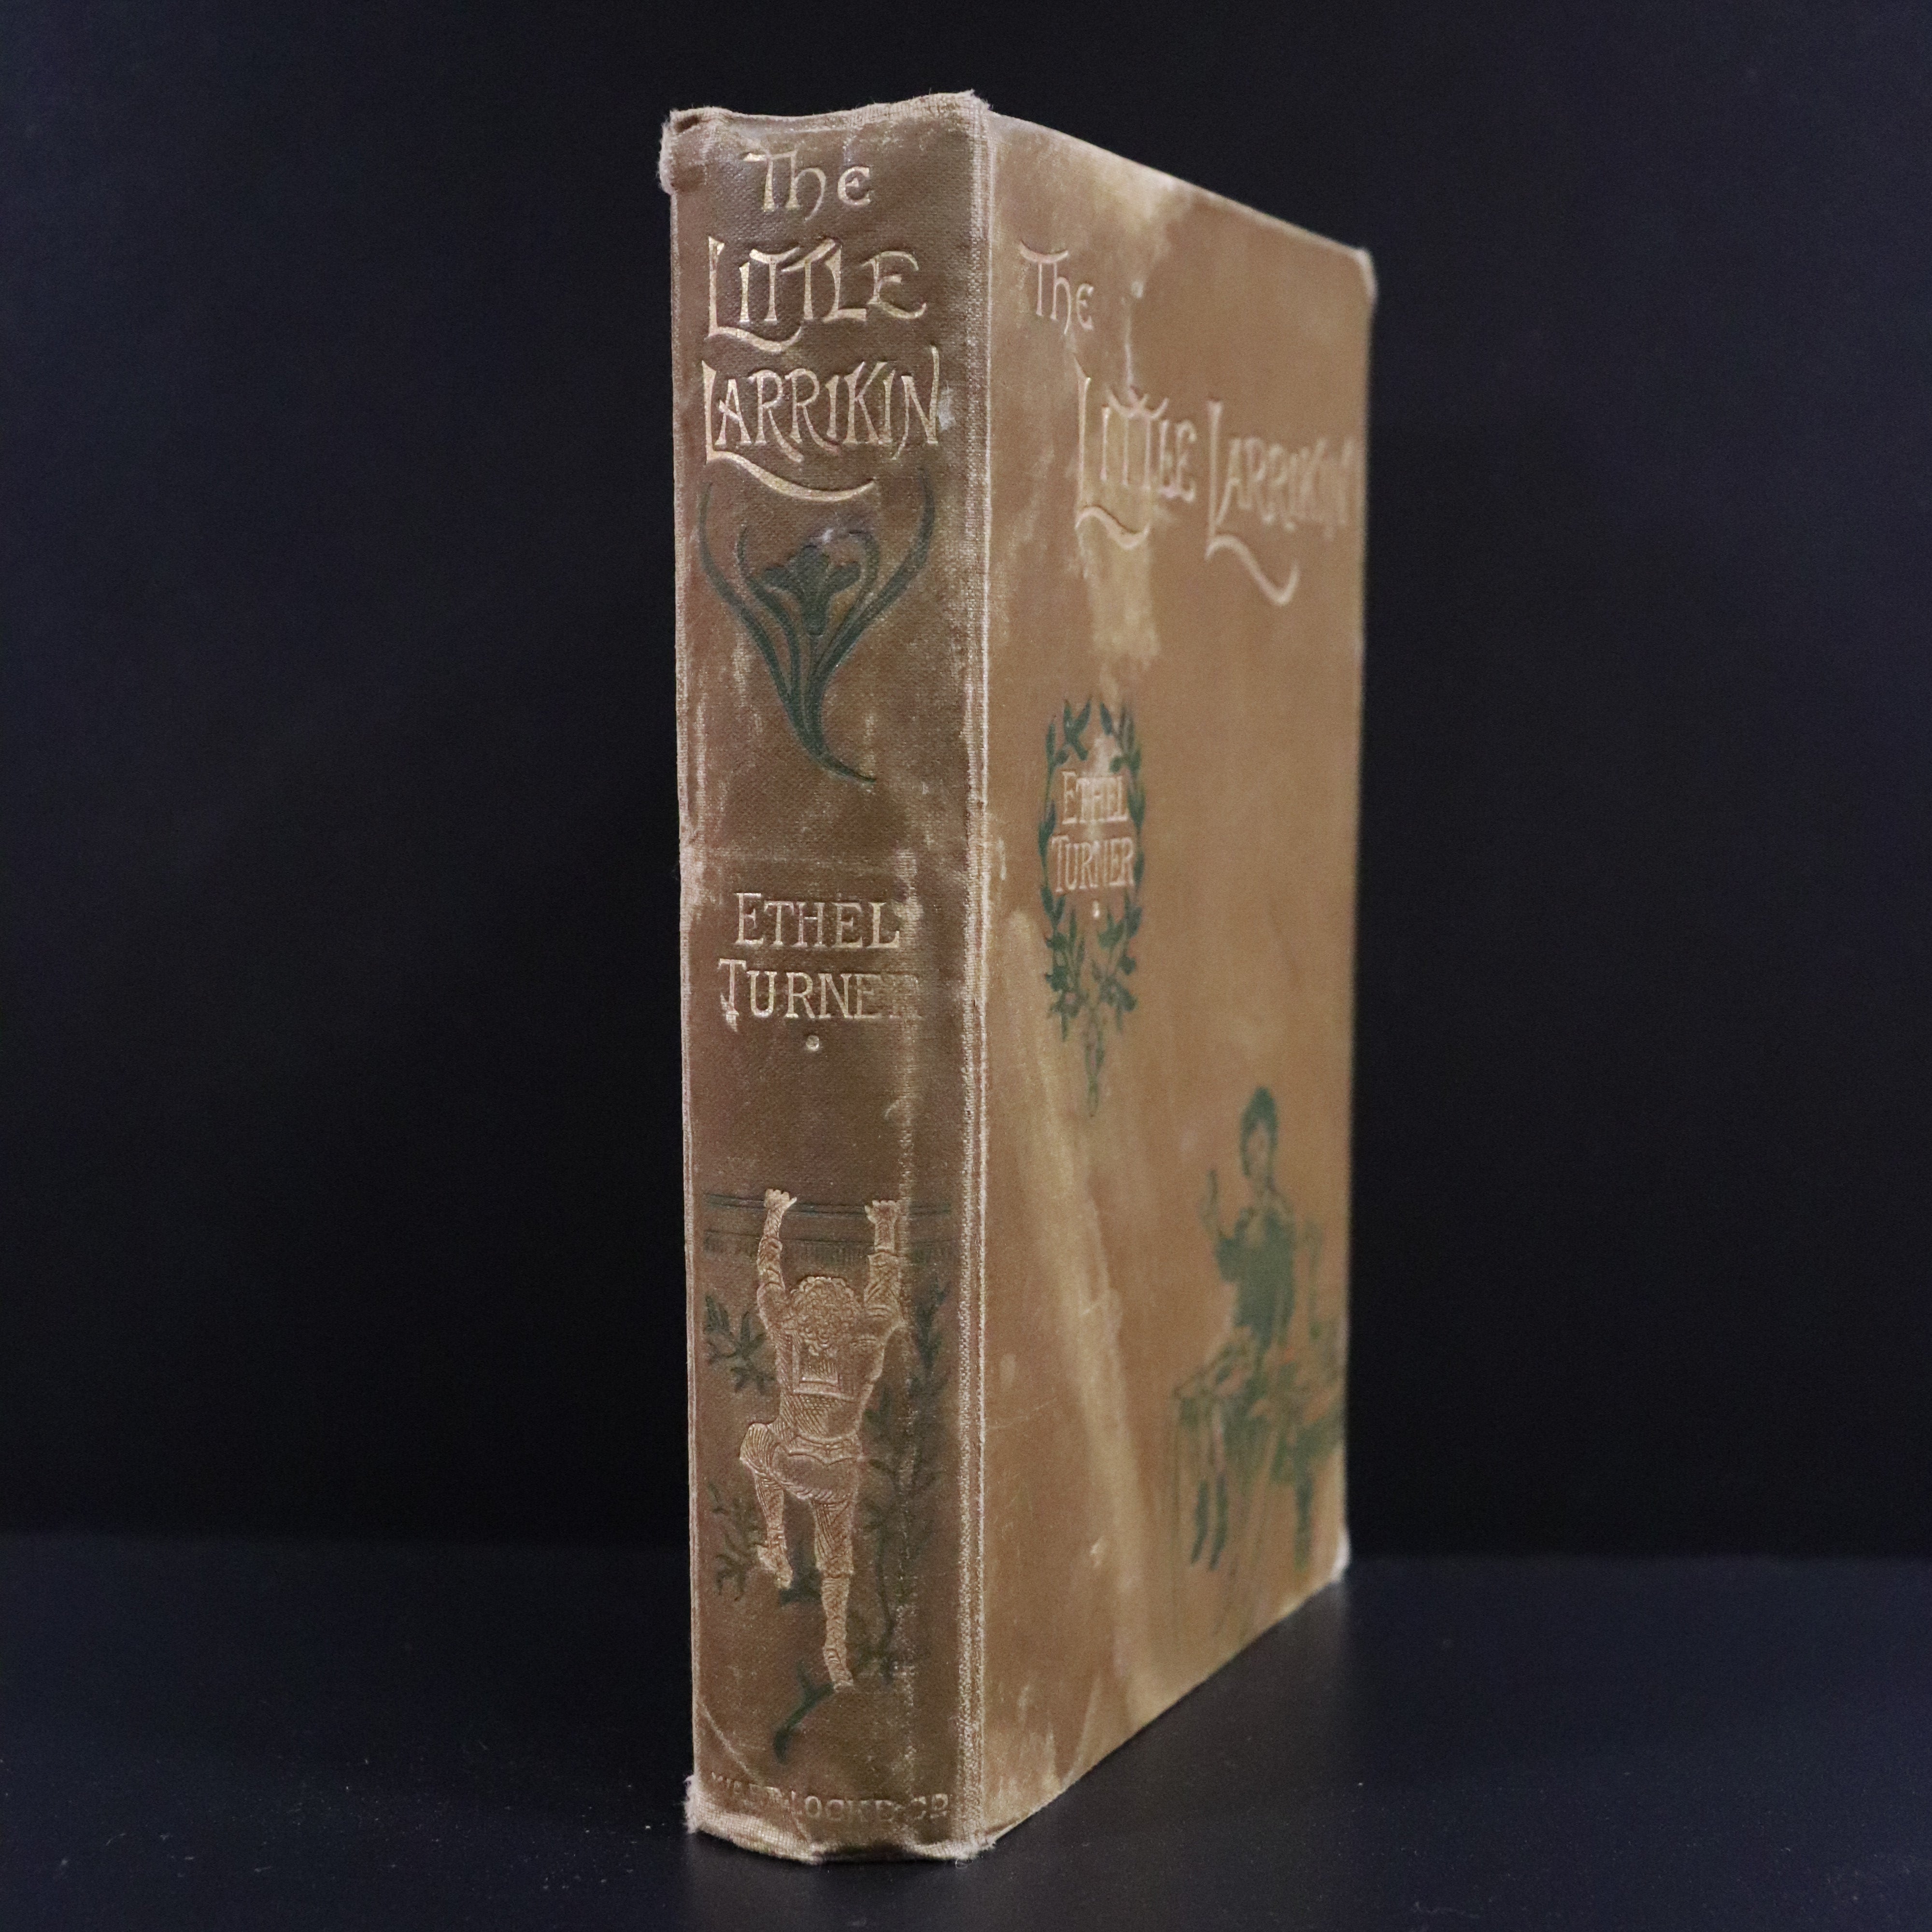 c1900 The Little Larrikin by Ethel Turner Antique Australian Fiction Book